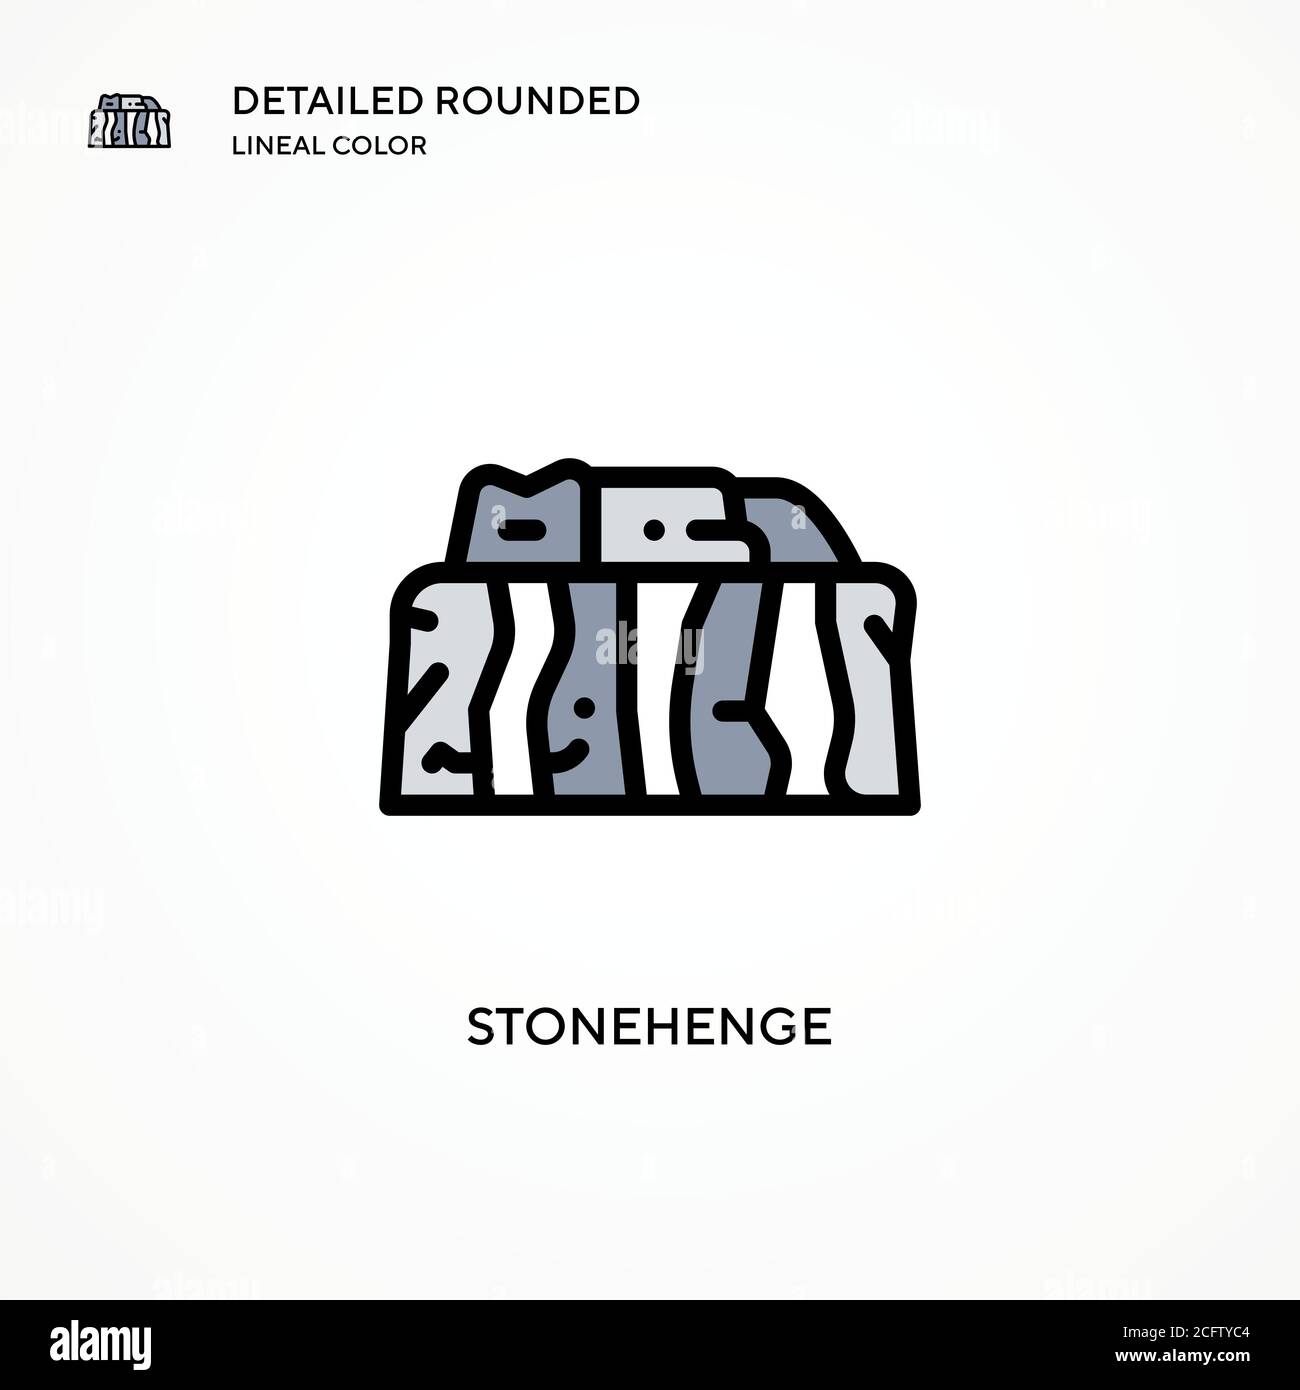 Stonehenge Vektor-Symbol. Moderne Vektorgrafik Konzepte. Einfach zu bearbeiten und anzupassen. Stock Vektor